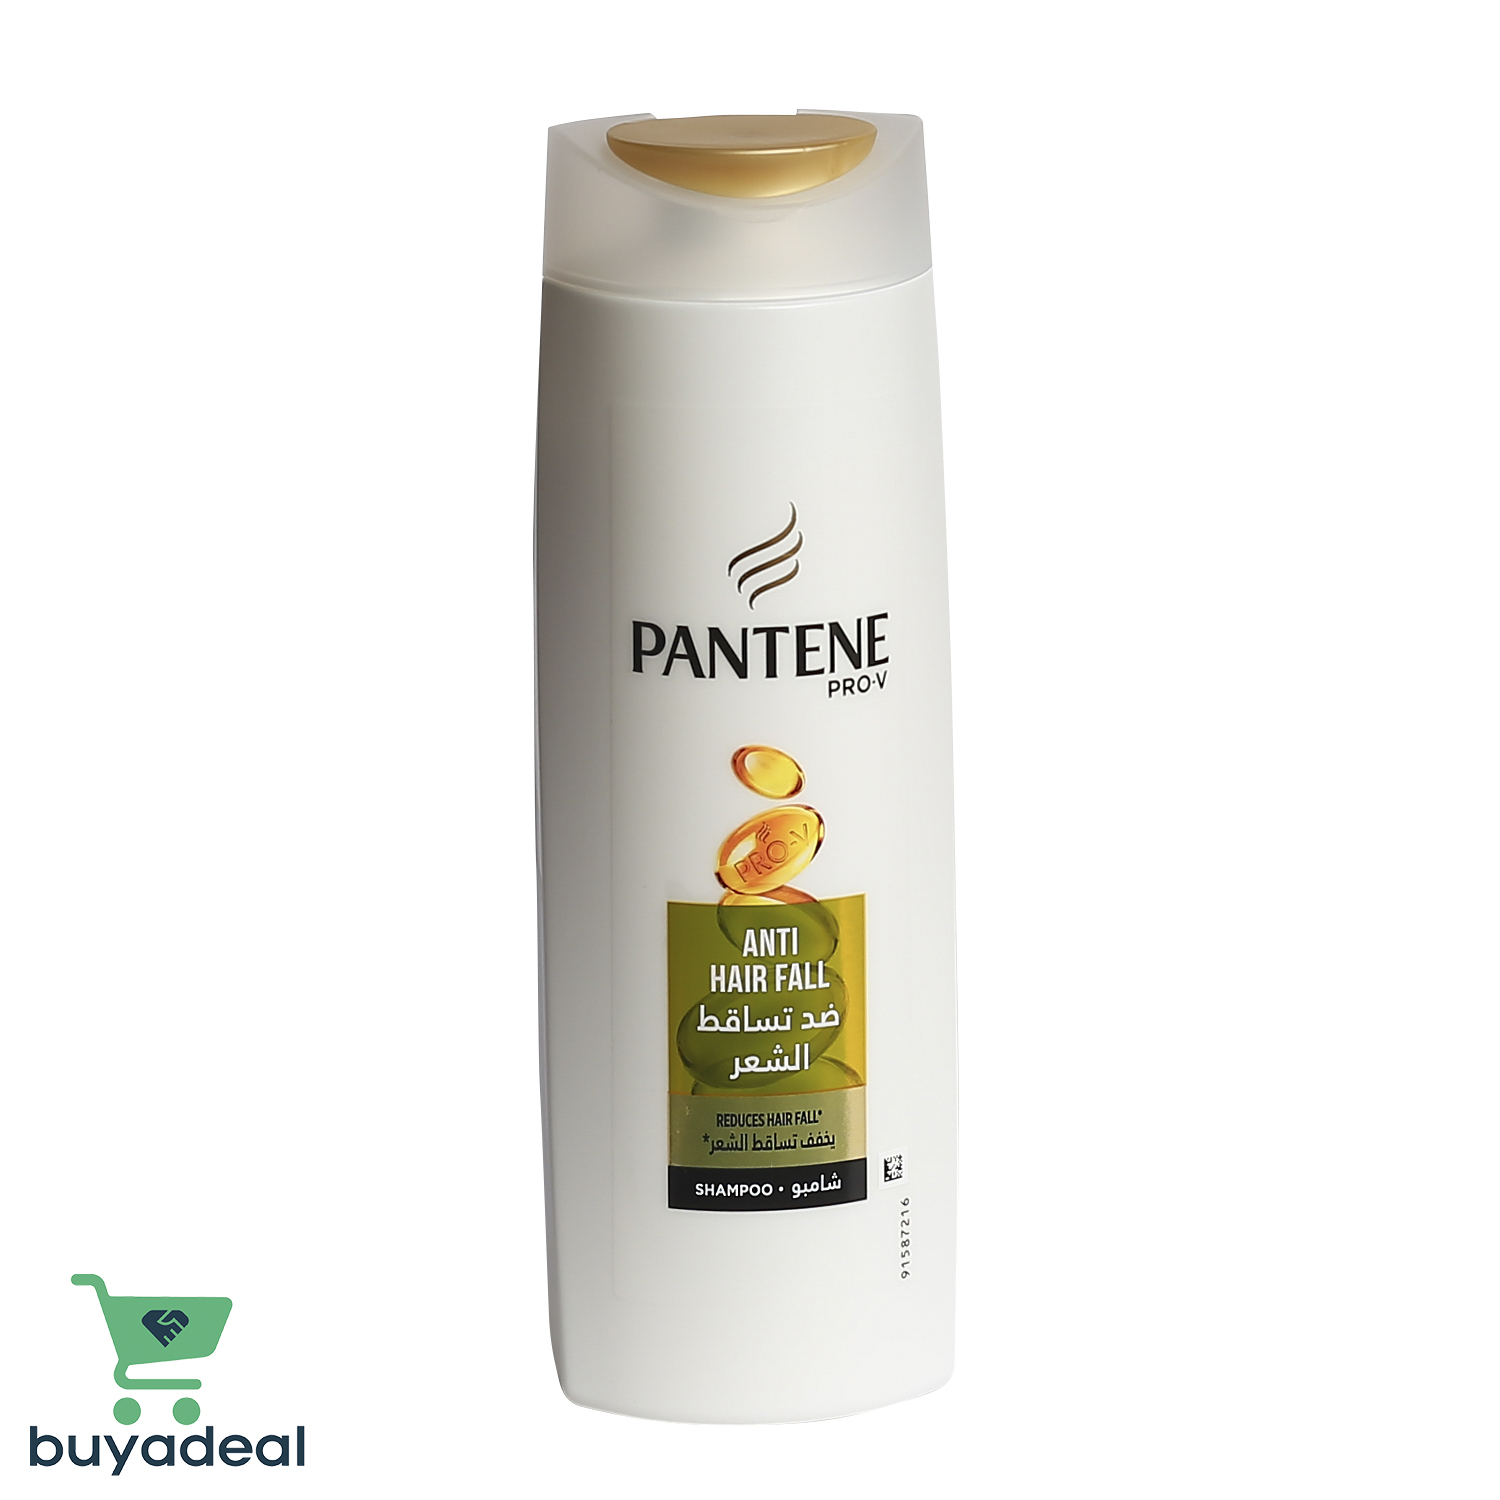 Buyadeal Product Pantene Pro-V Smooth & Silky Shampoo - 400ml